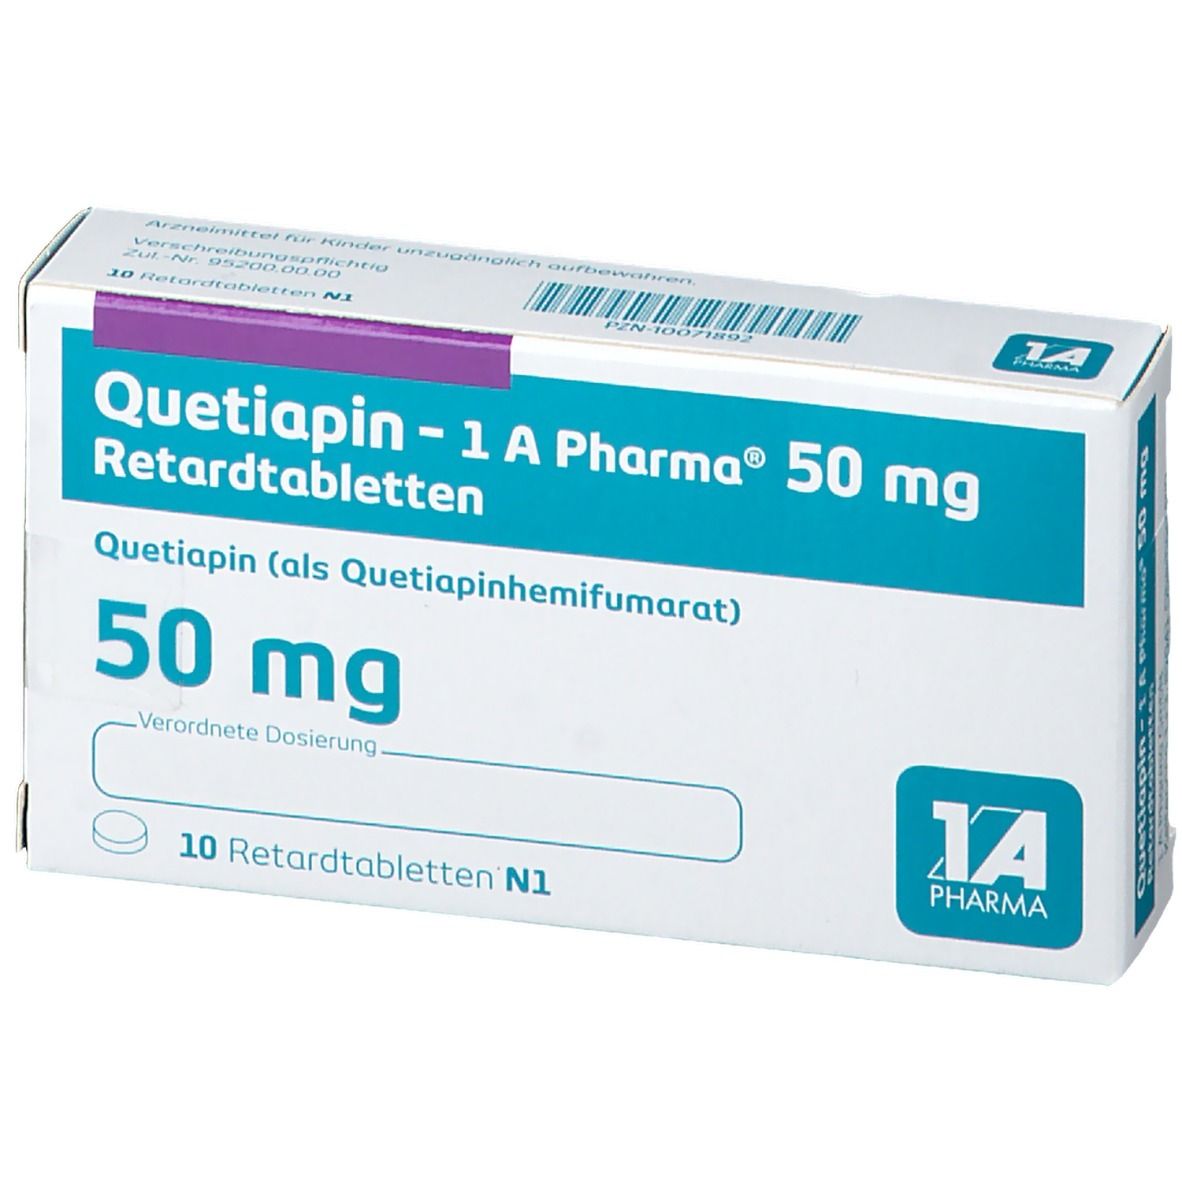 Quetiapin - 1 A Pharma® 50 mg